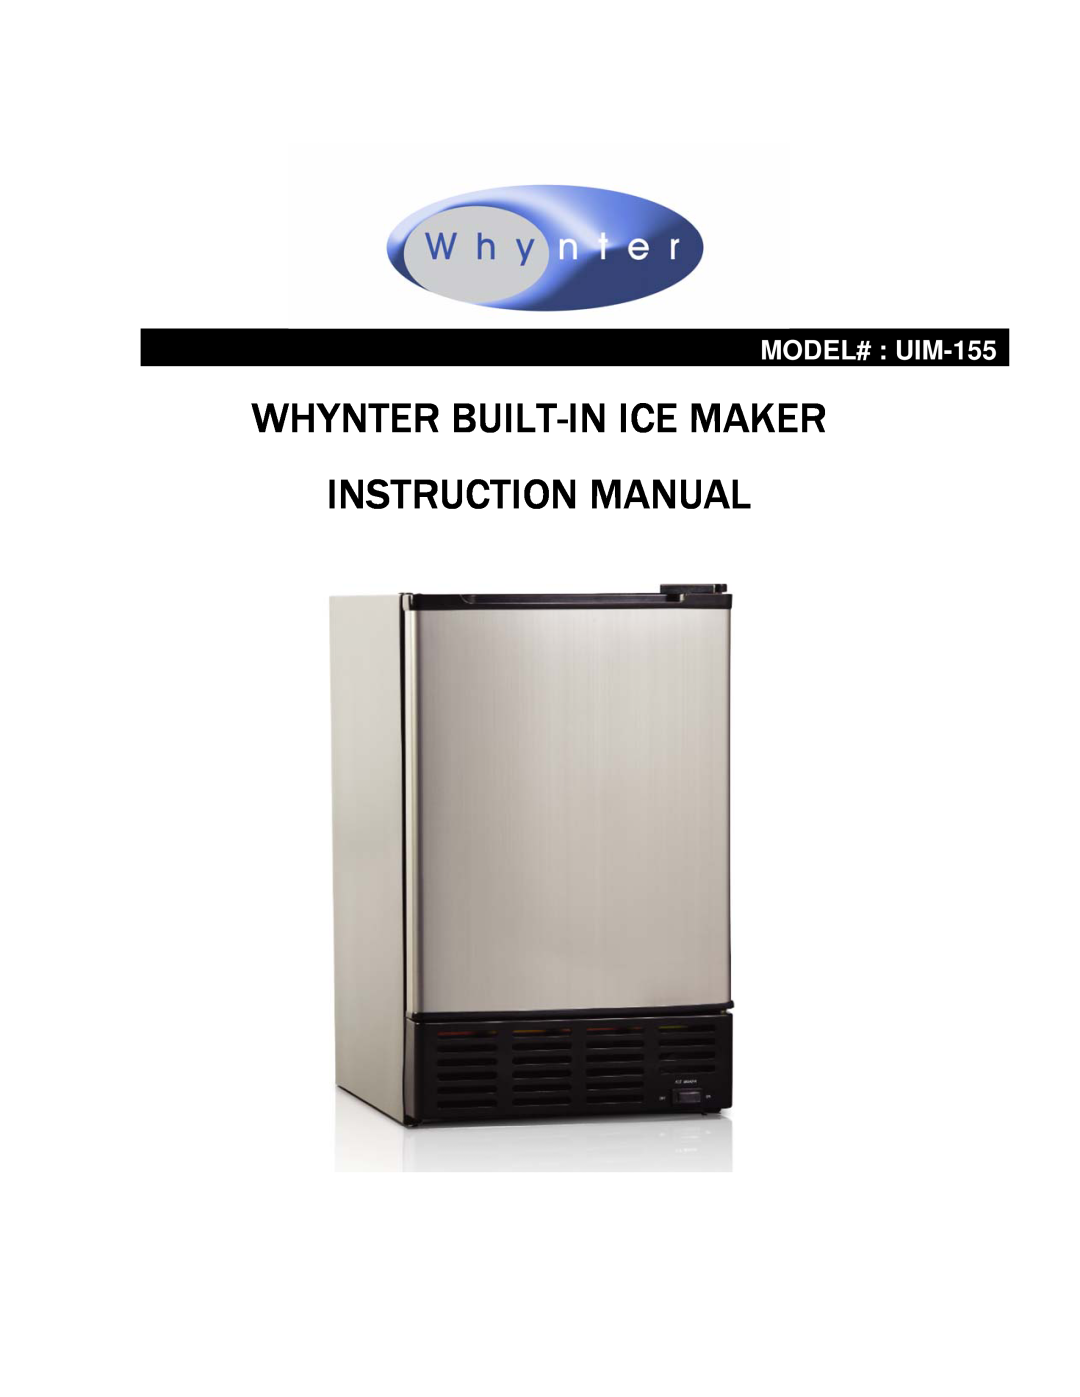 Whynter instruction manual MODEL# : UIM-155 